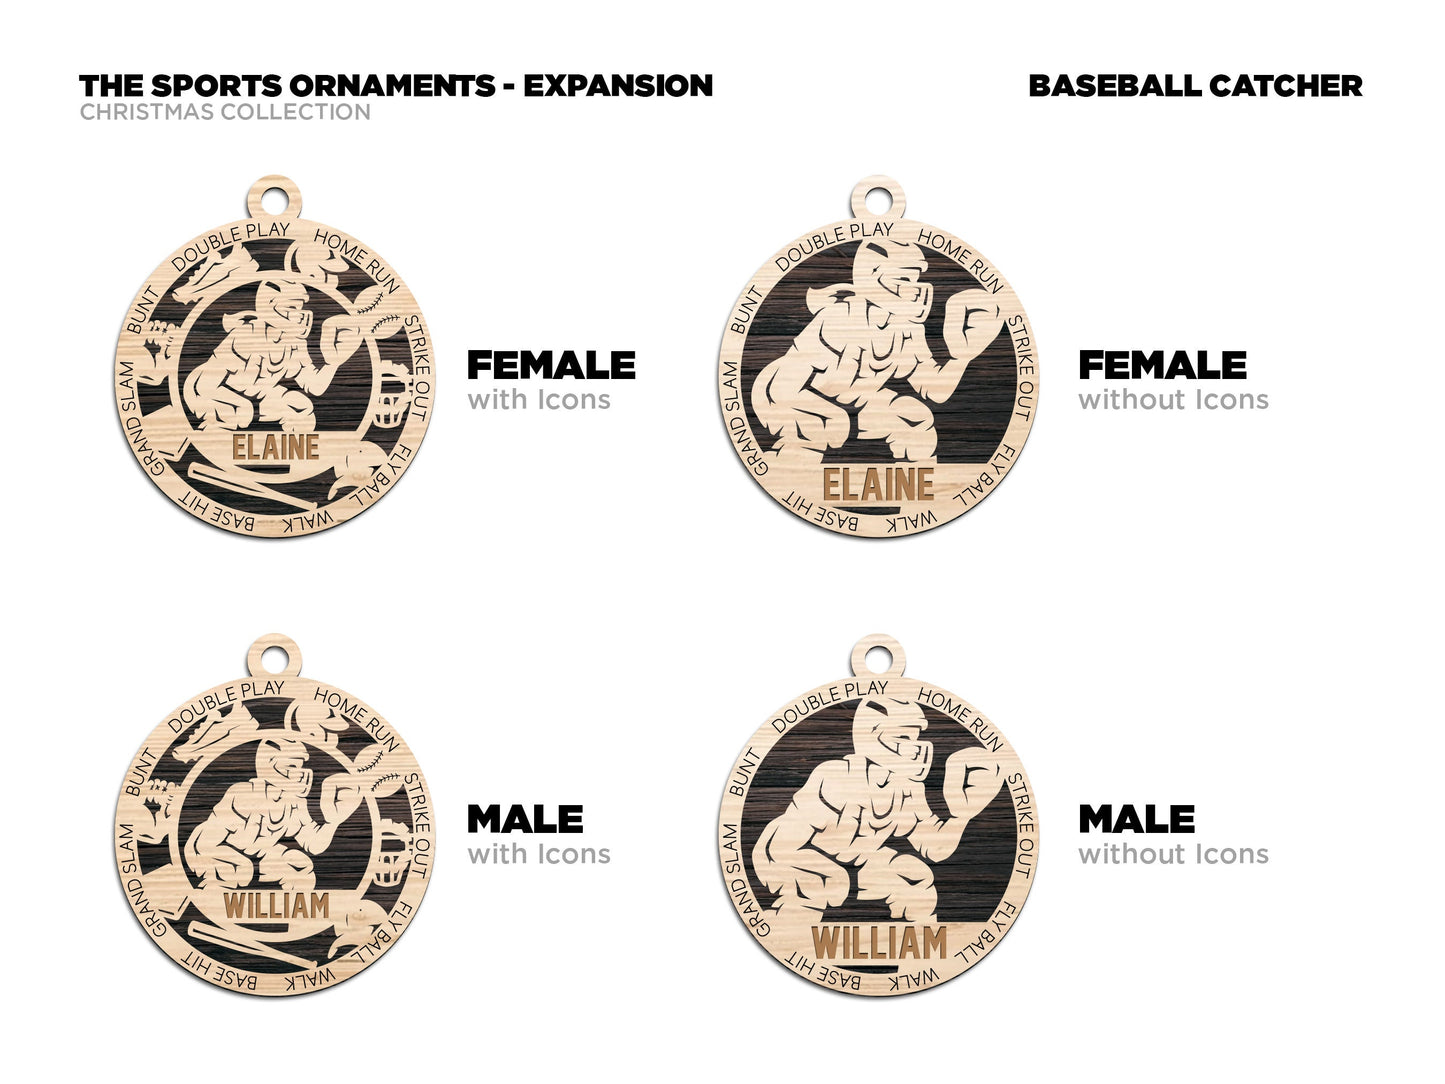 Back Catcher - Stadium Series Ornaments - 4 Unique designs - SVG, PDF, AI File Download - Sized for Glowforge